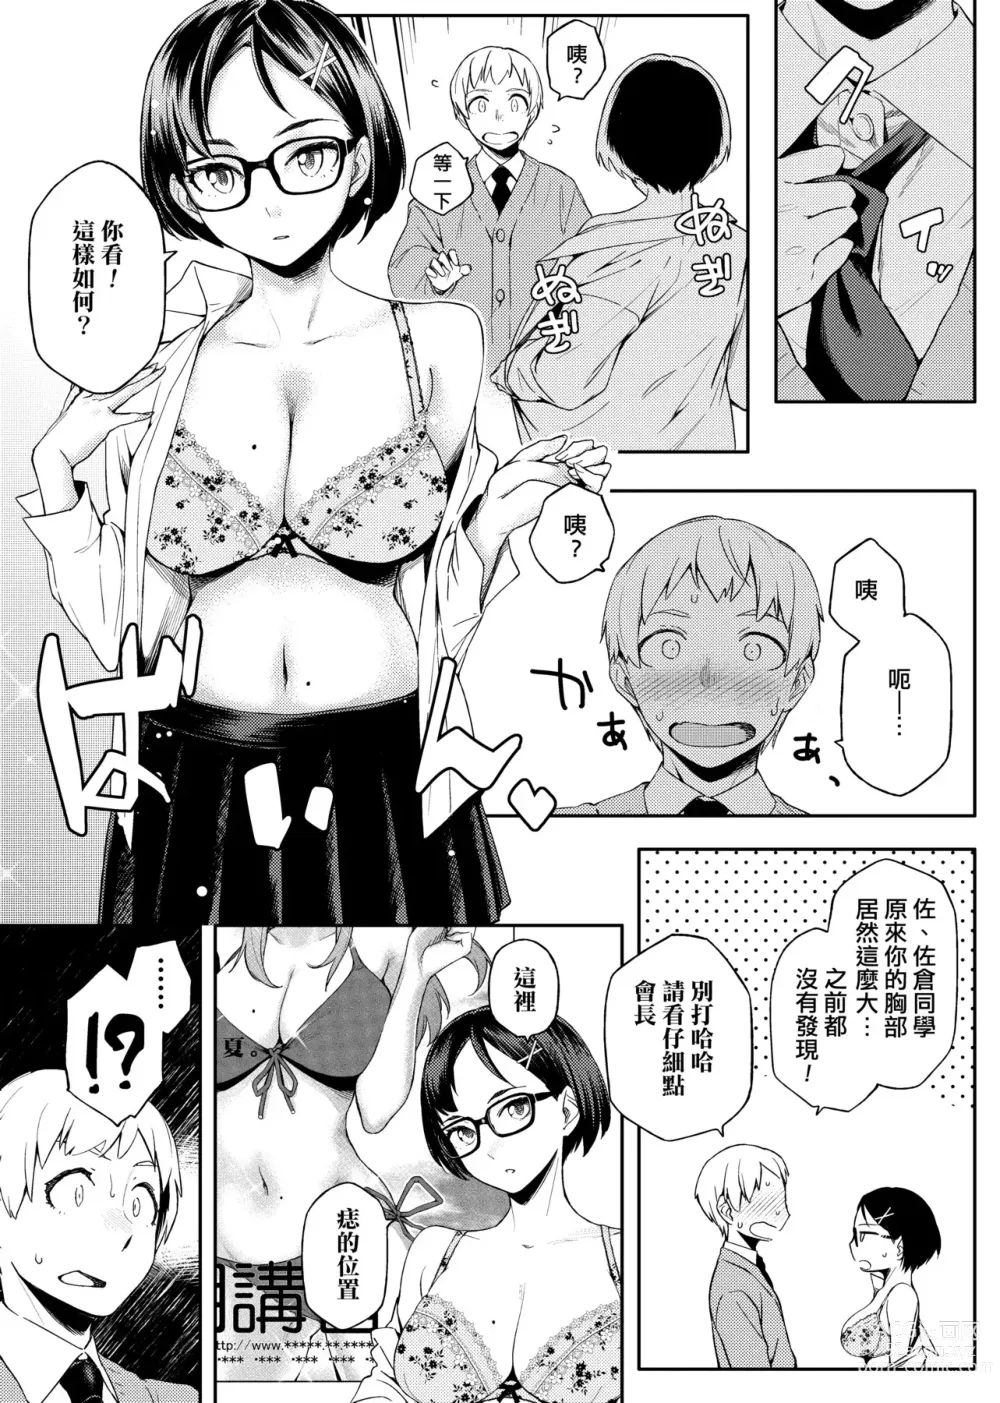 Page 218 of manga Natsu Koi Ota Girl - What Brings You to Japan?